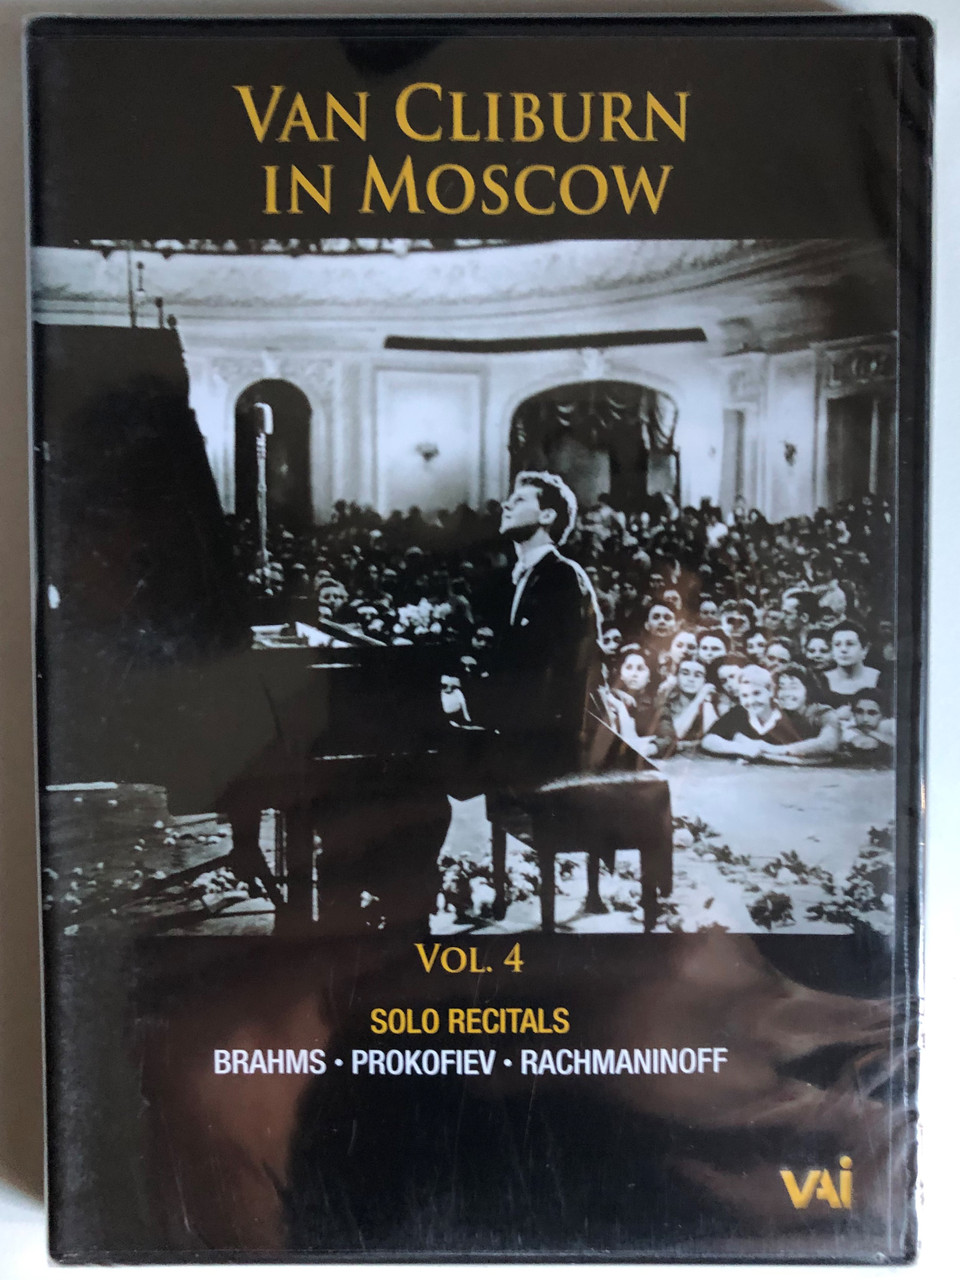 Van_Cliburn_in_Moscow_Volume_4_Brahms_-_Prokofiev_-_Rachmaninof_Van_Cliburn_piano_Live_performances_1972_Brahms_Prokofiev_1960_Rachmaninoff_Recorded_in_the_Great_Hall___43103.1691923472.1280.1280.JPG (960×1280)